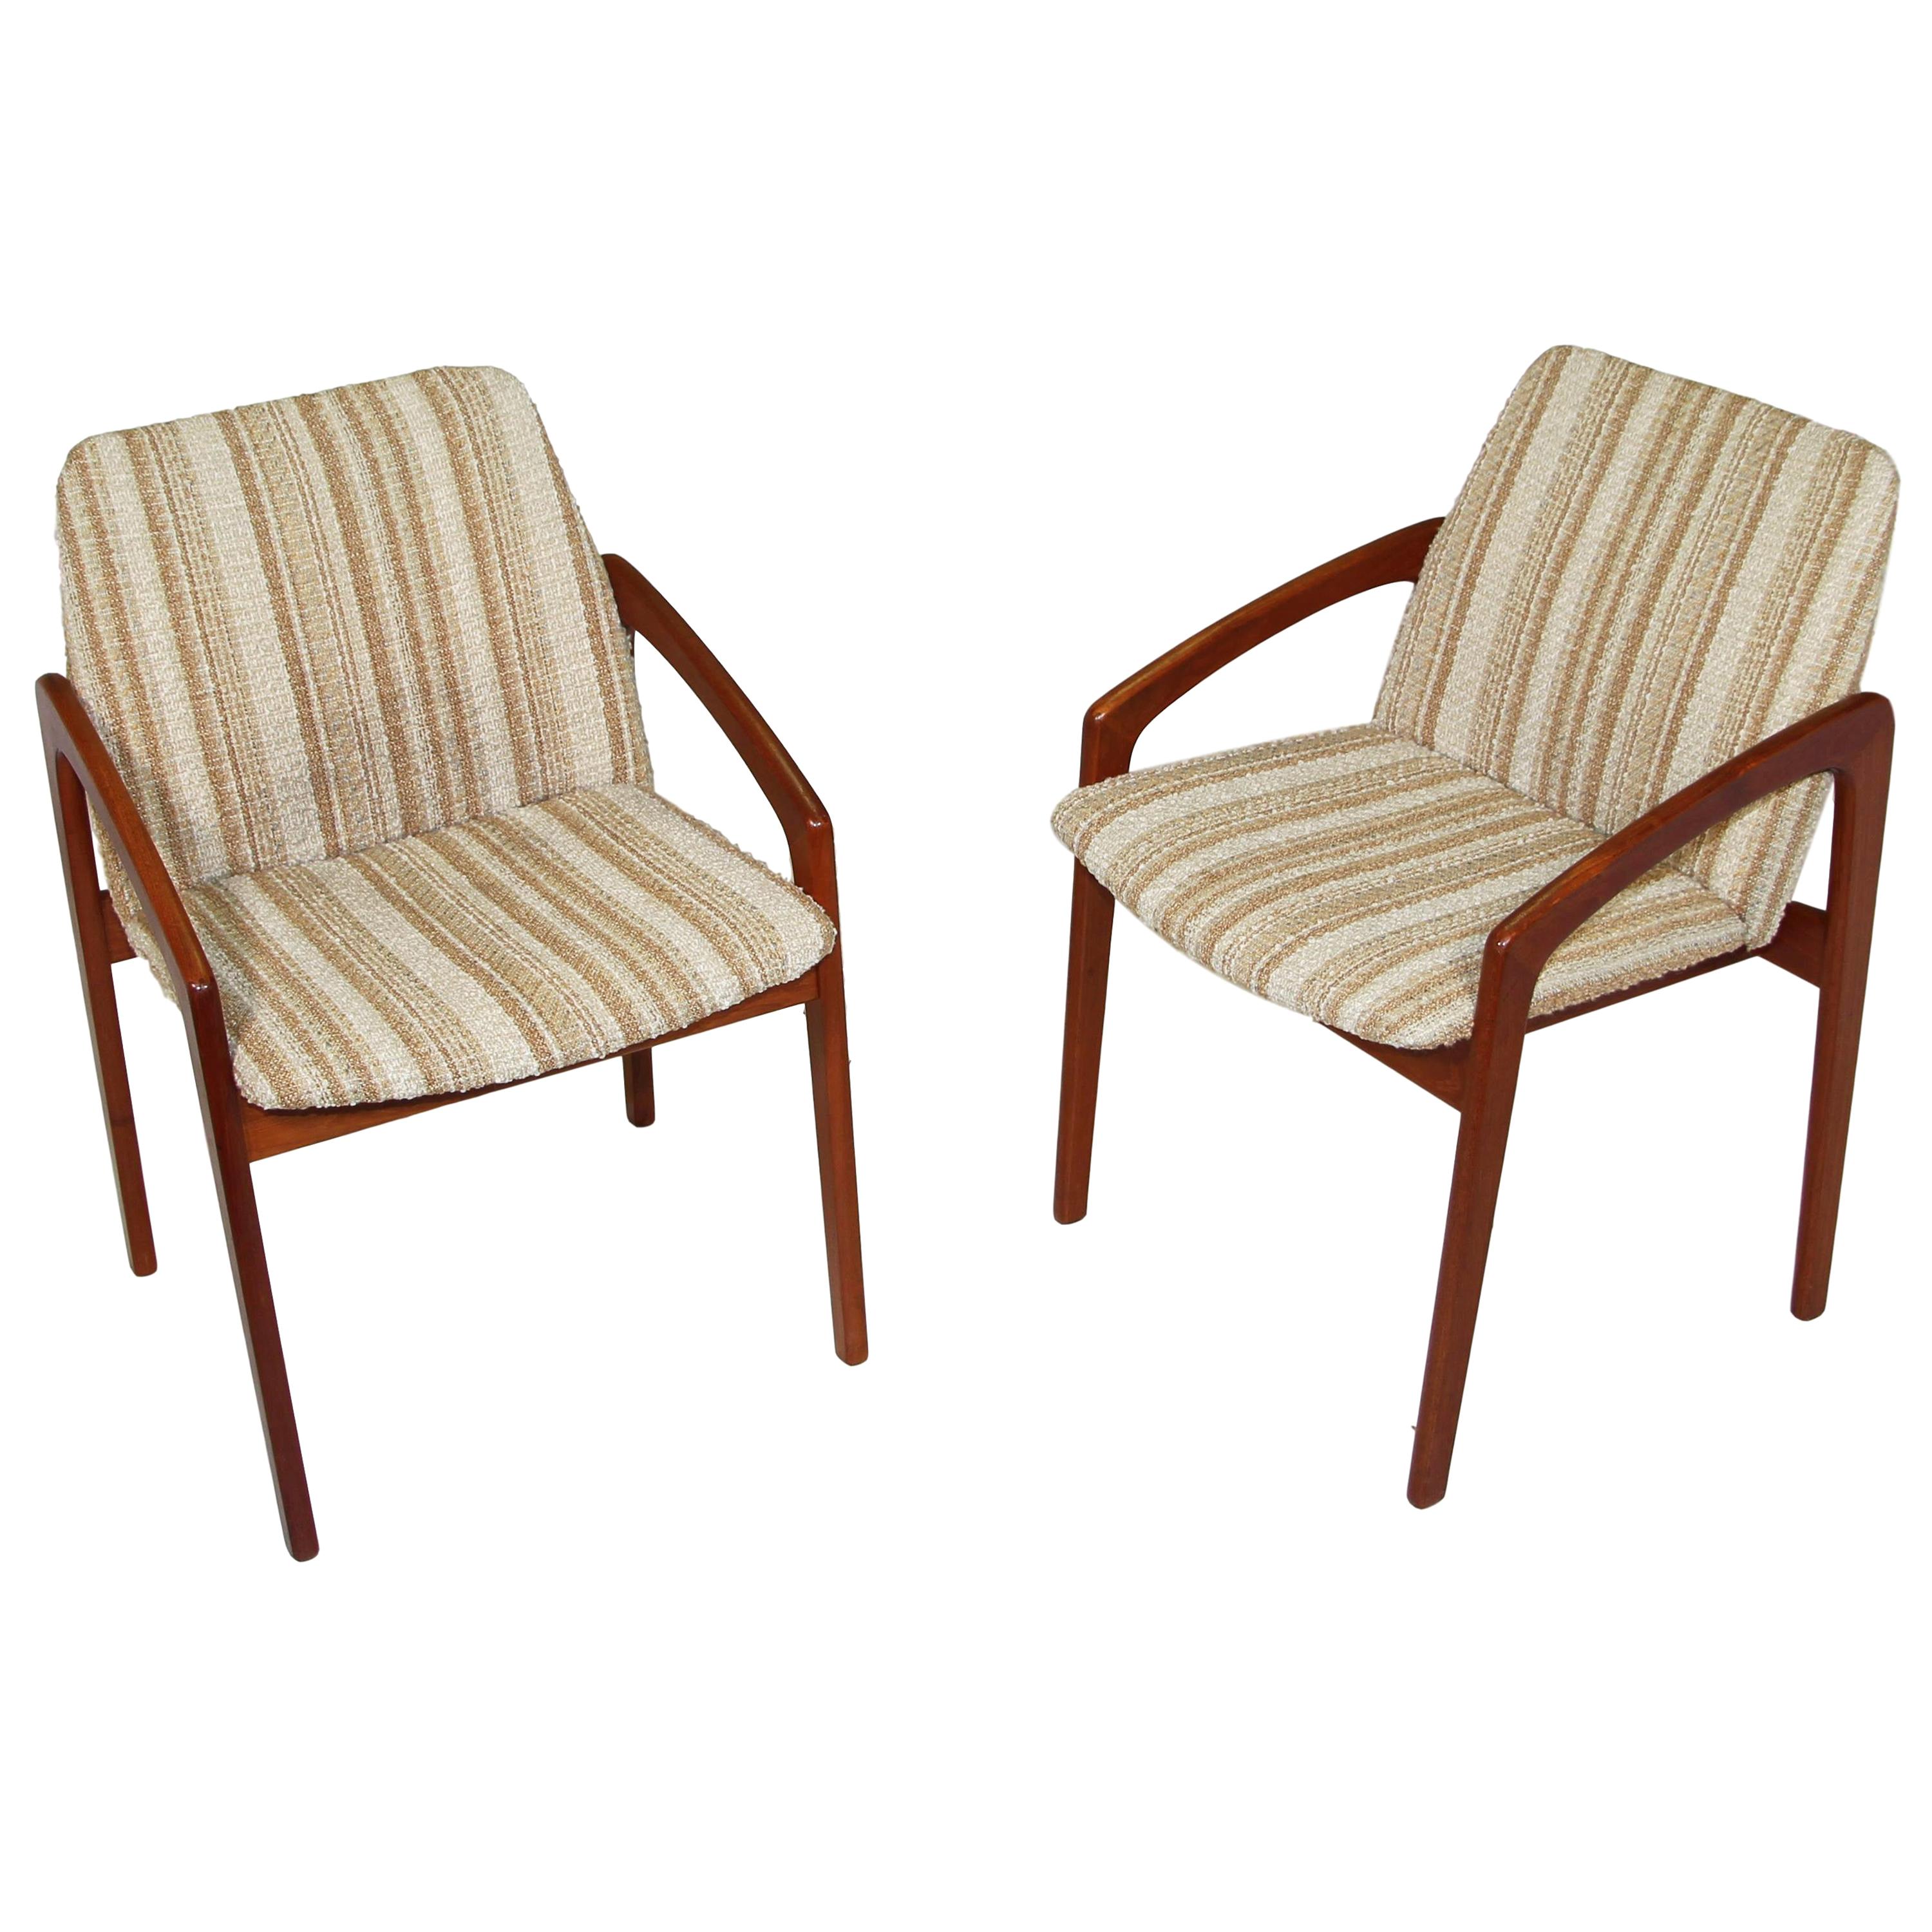 Set of 2 Danish Modern Chairs by Kai Kristiansen